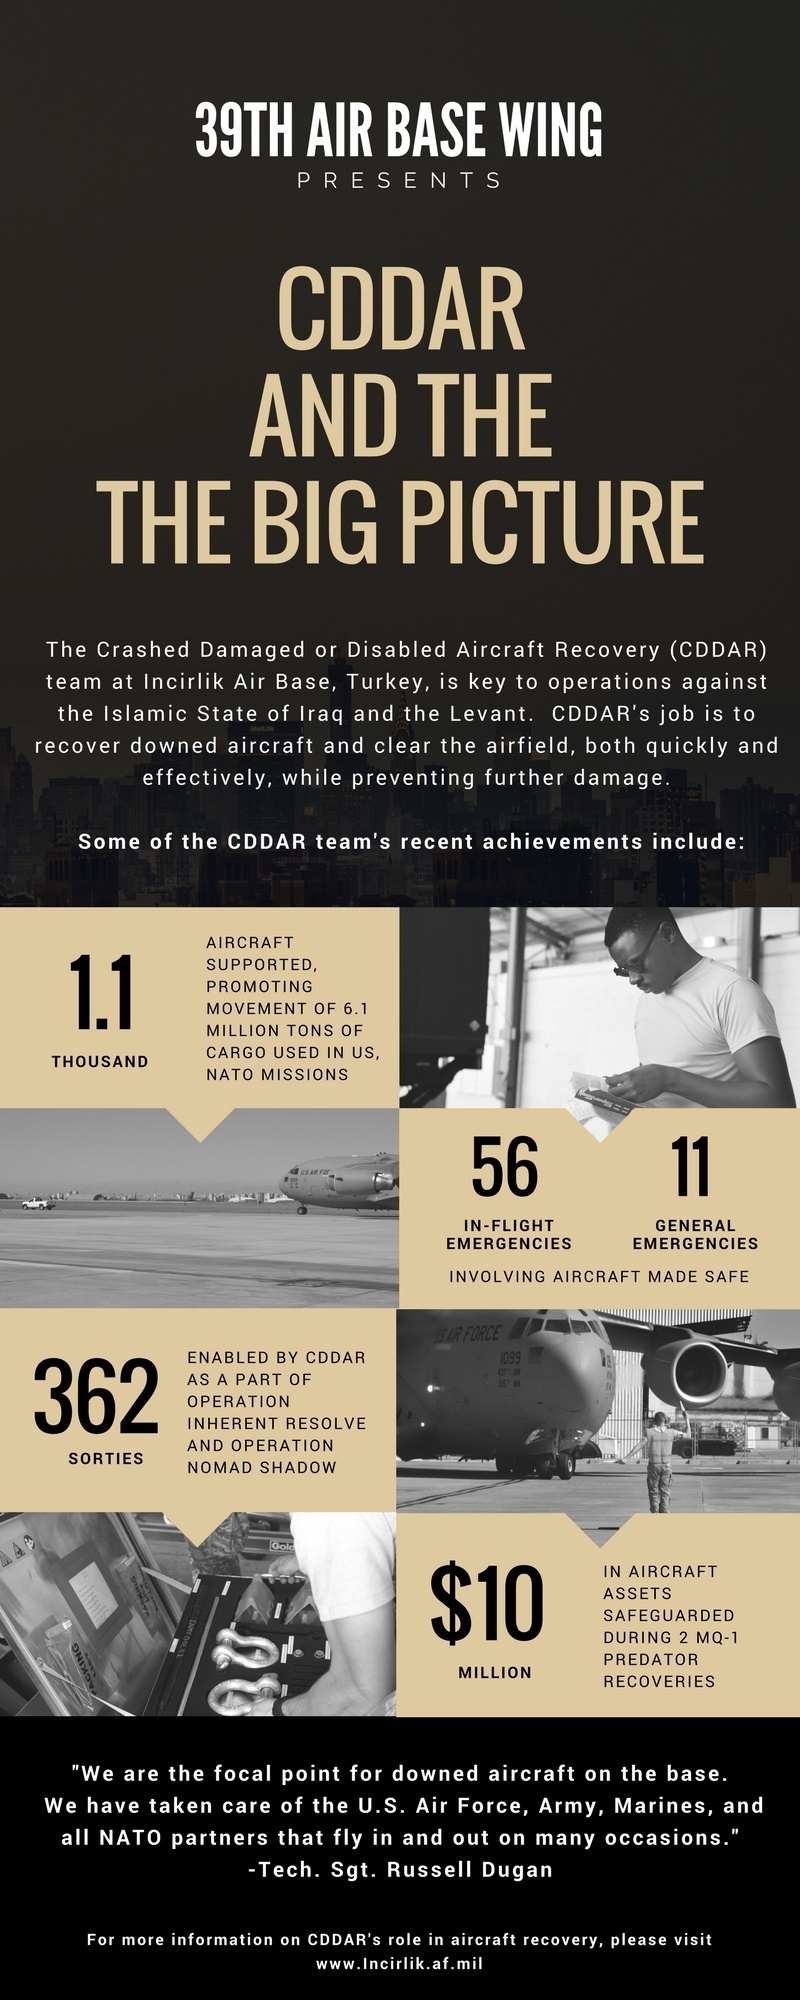 CDDAR team uses skillset to recover aircraft